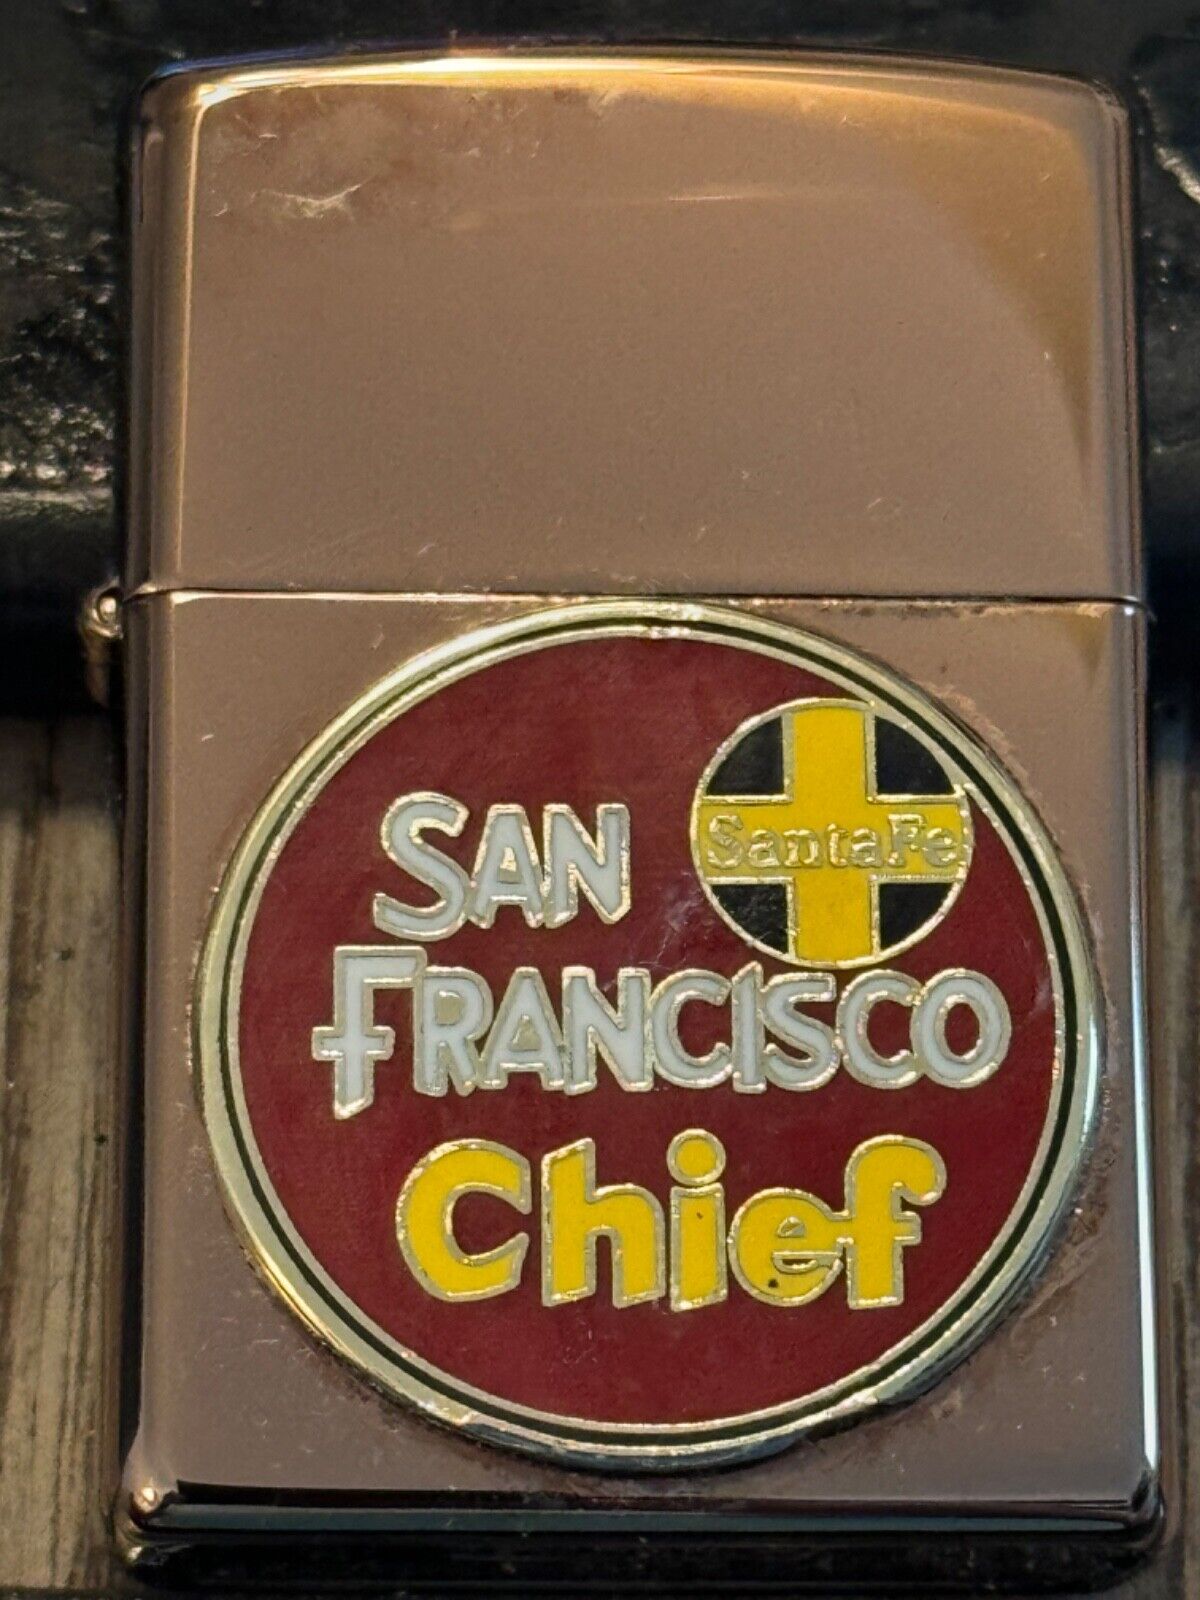 Zippo Lighter San Francisco Chief Santa Fe Railroad